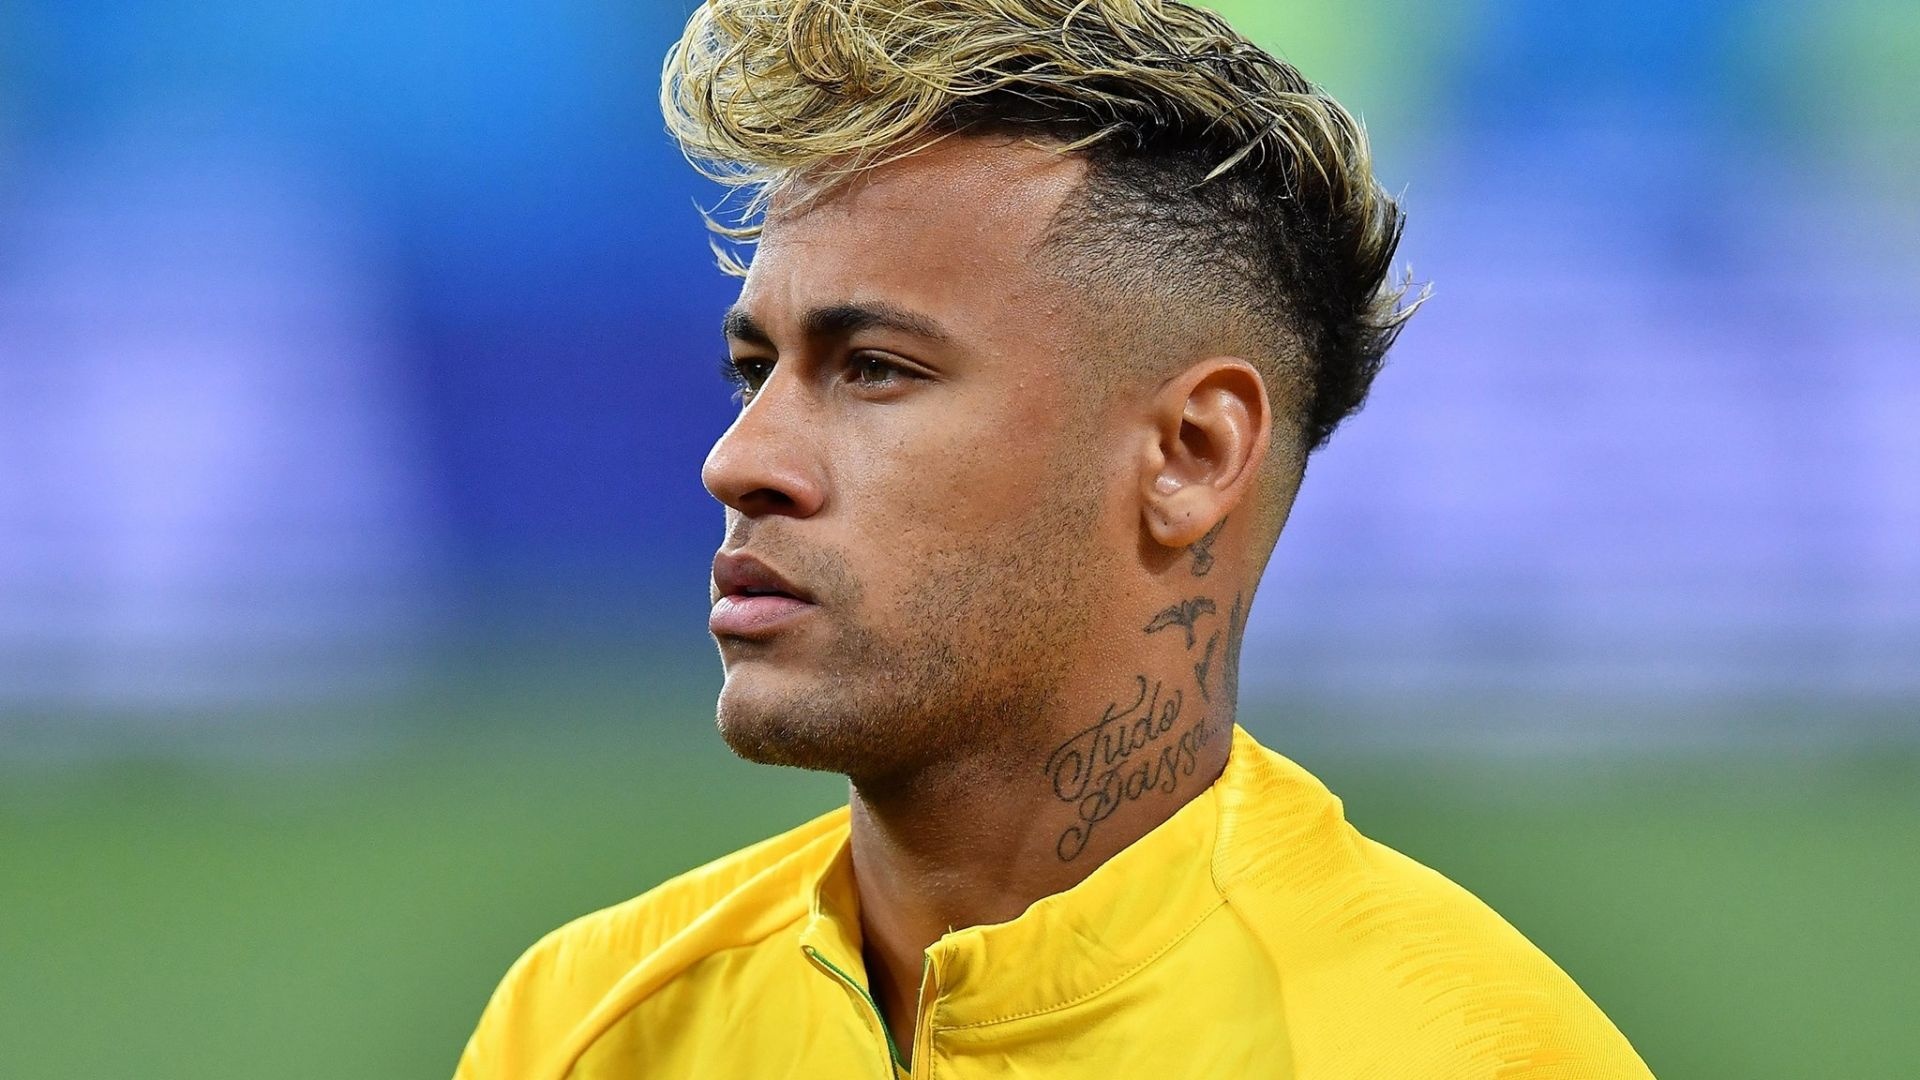 Neymar celebrity football, Player wallpaper, HD image, Football icon, 1920x1080 Full HD Desktop